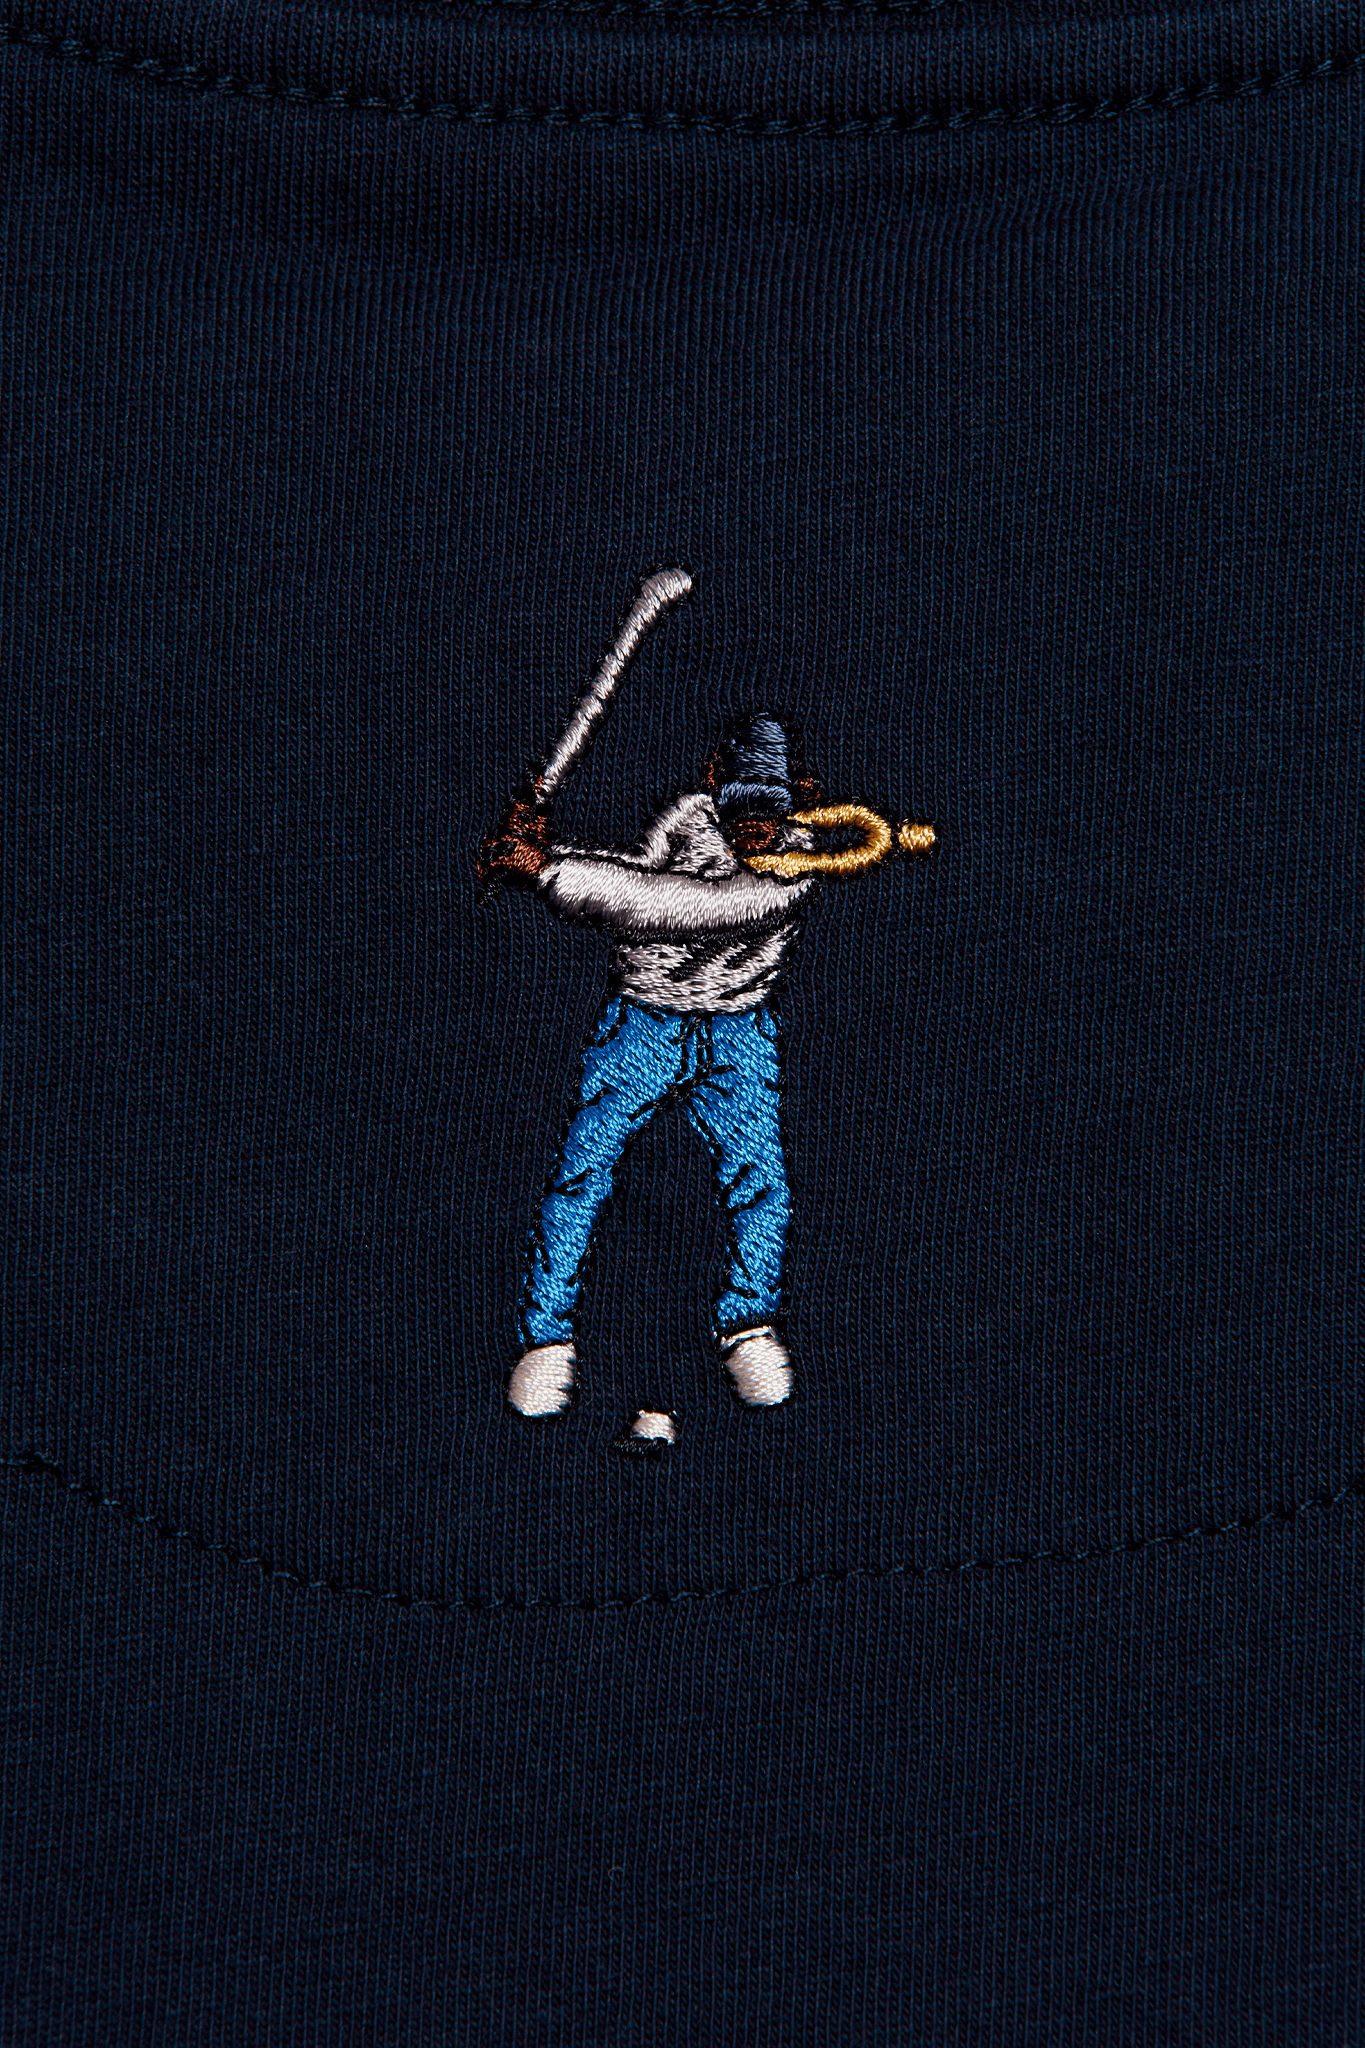 Midnight Blue Eastside Golf Script T-Shirt